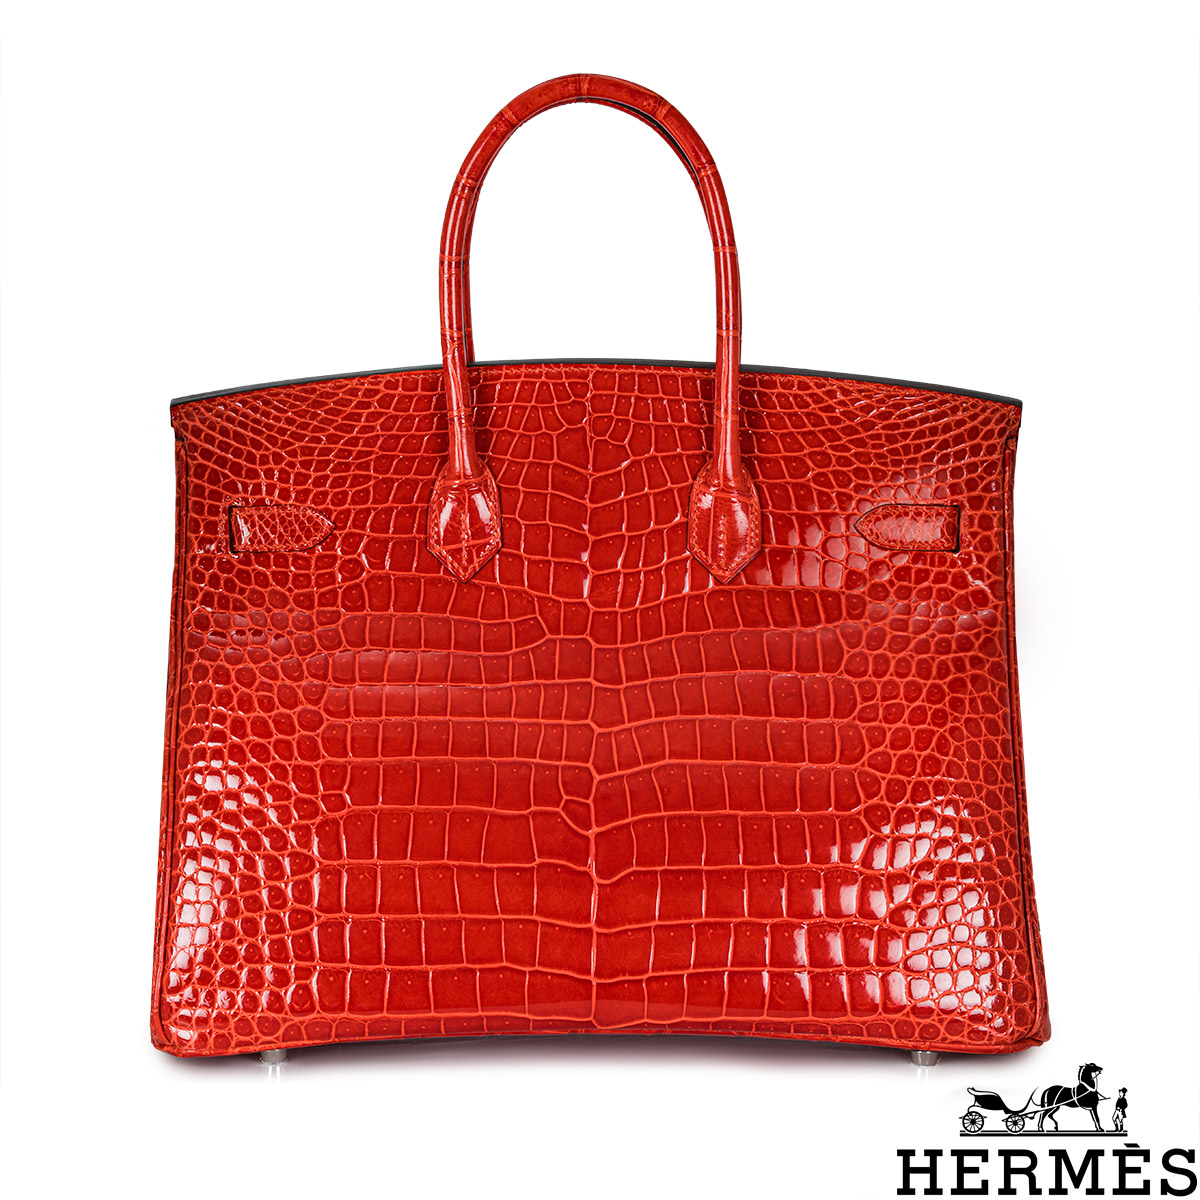 Hermès Birkin Togo 35